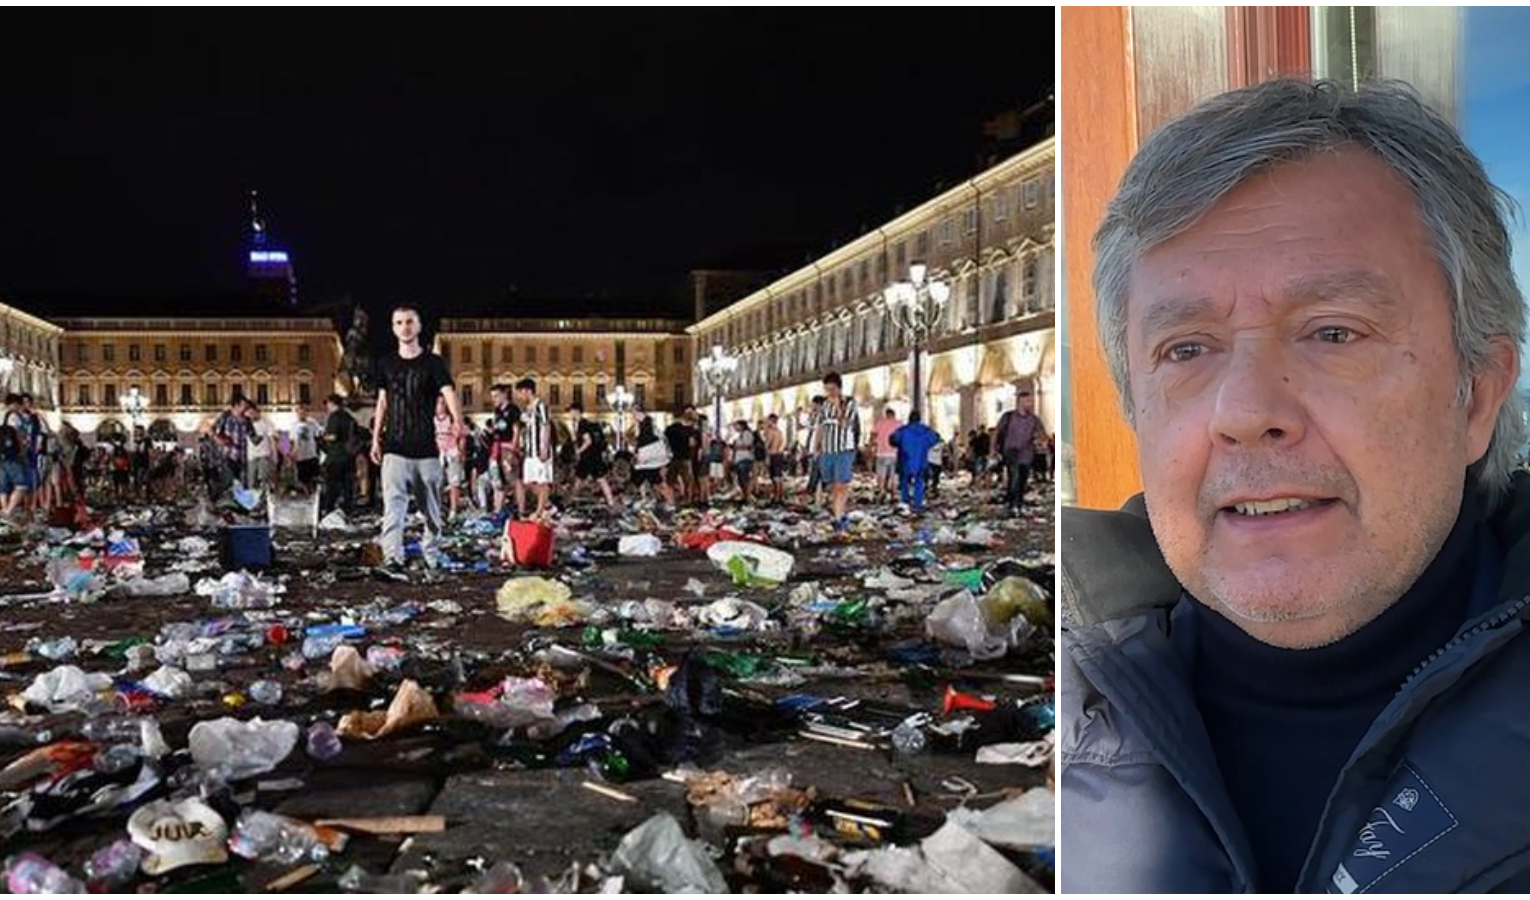 Tragedia di piazza San Carlo a Torino, l'ex questore assolto: 